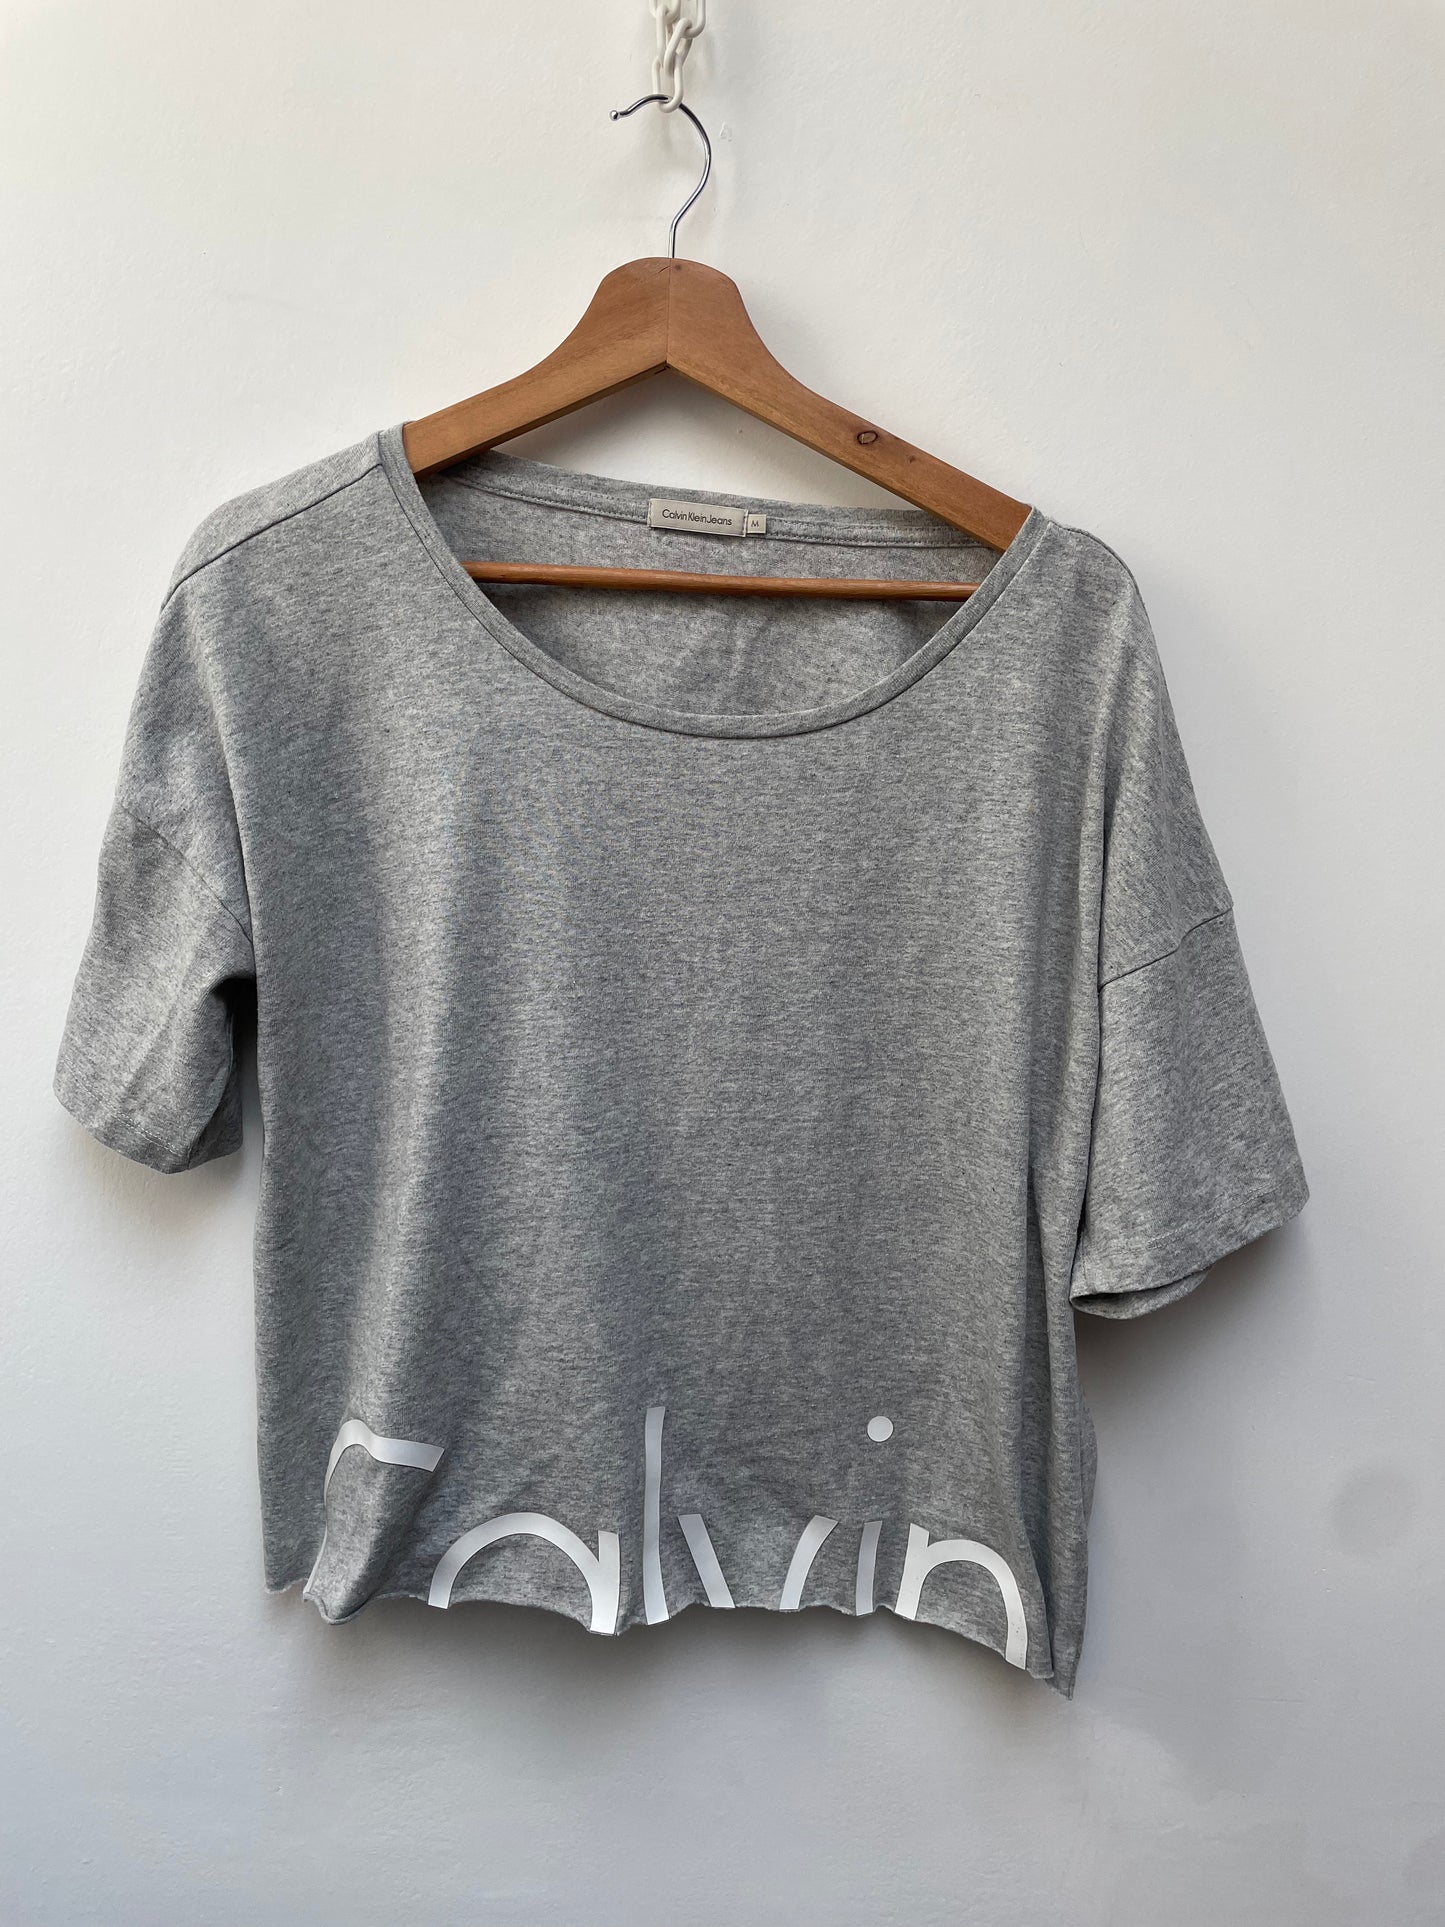 Calvin Klein grijs t-shirt cropped maat M